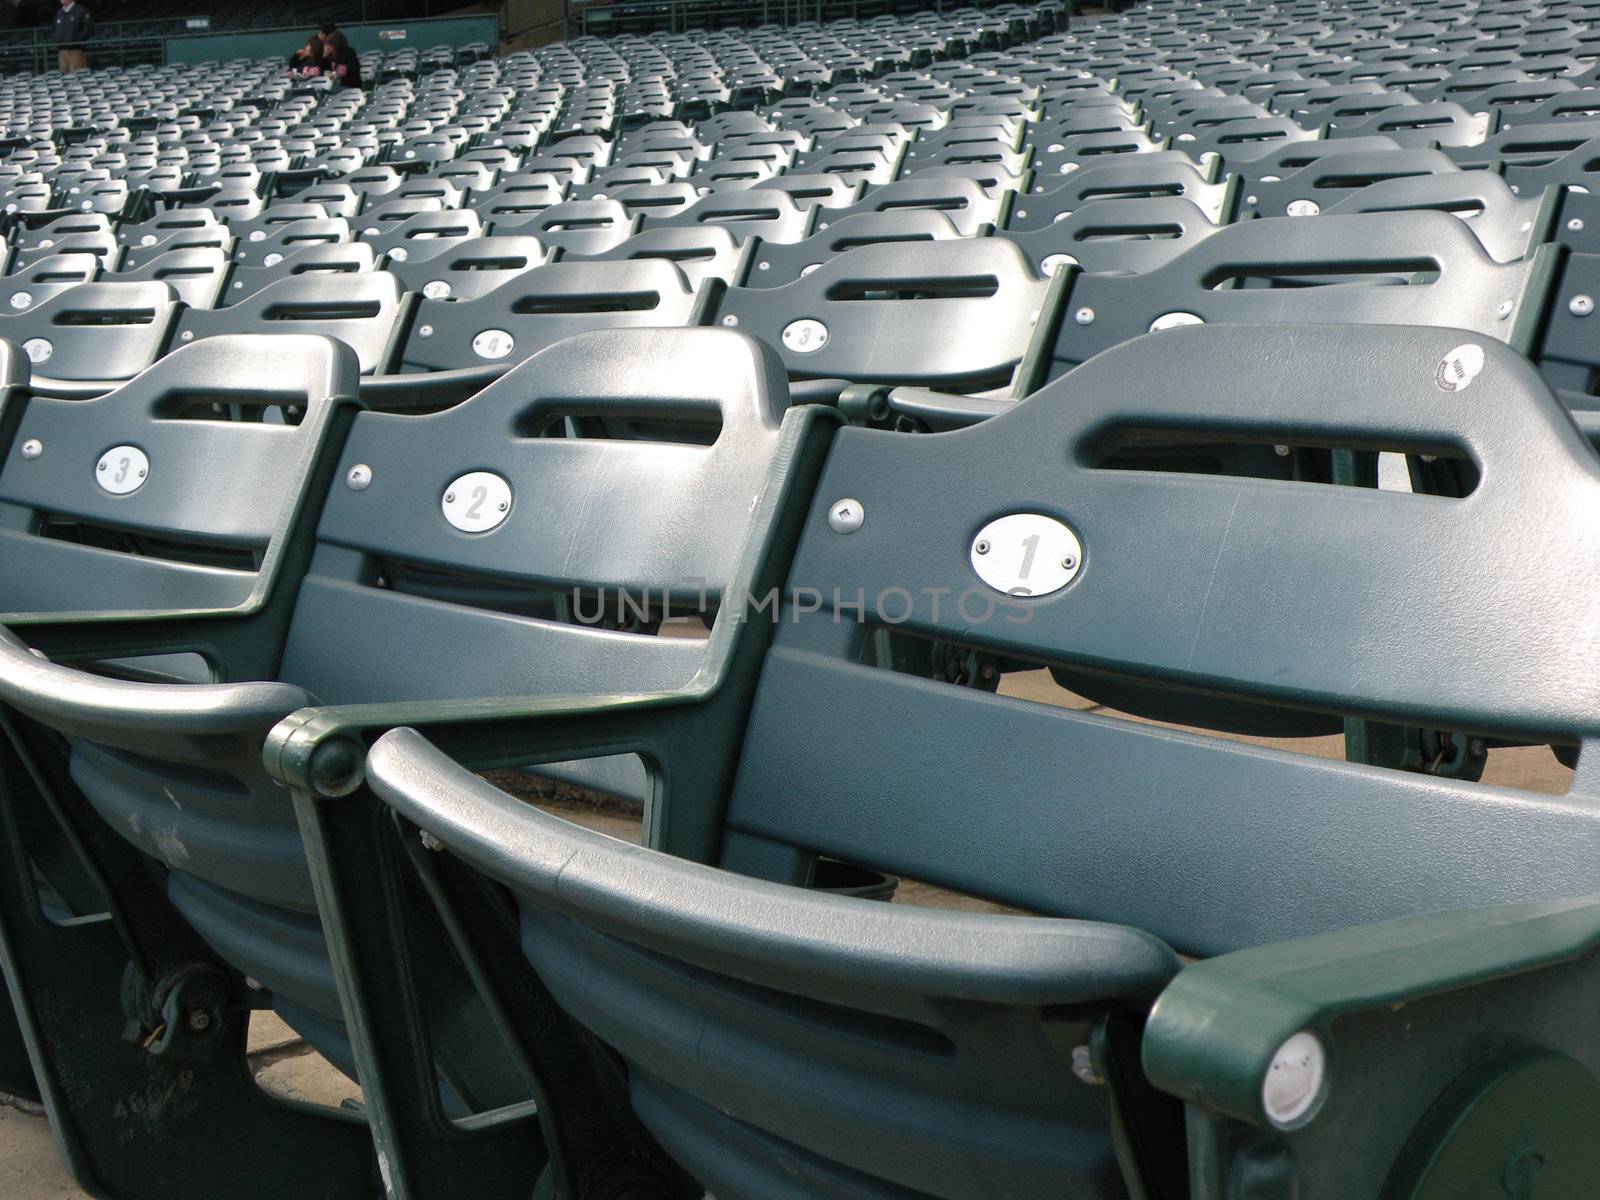 Empty sports stadium seating